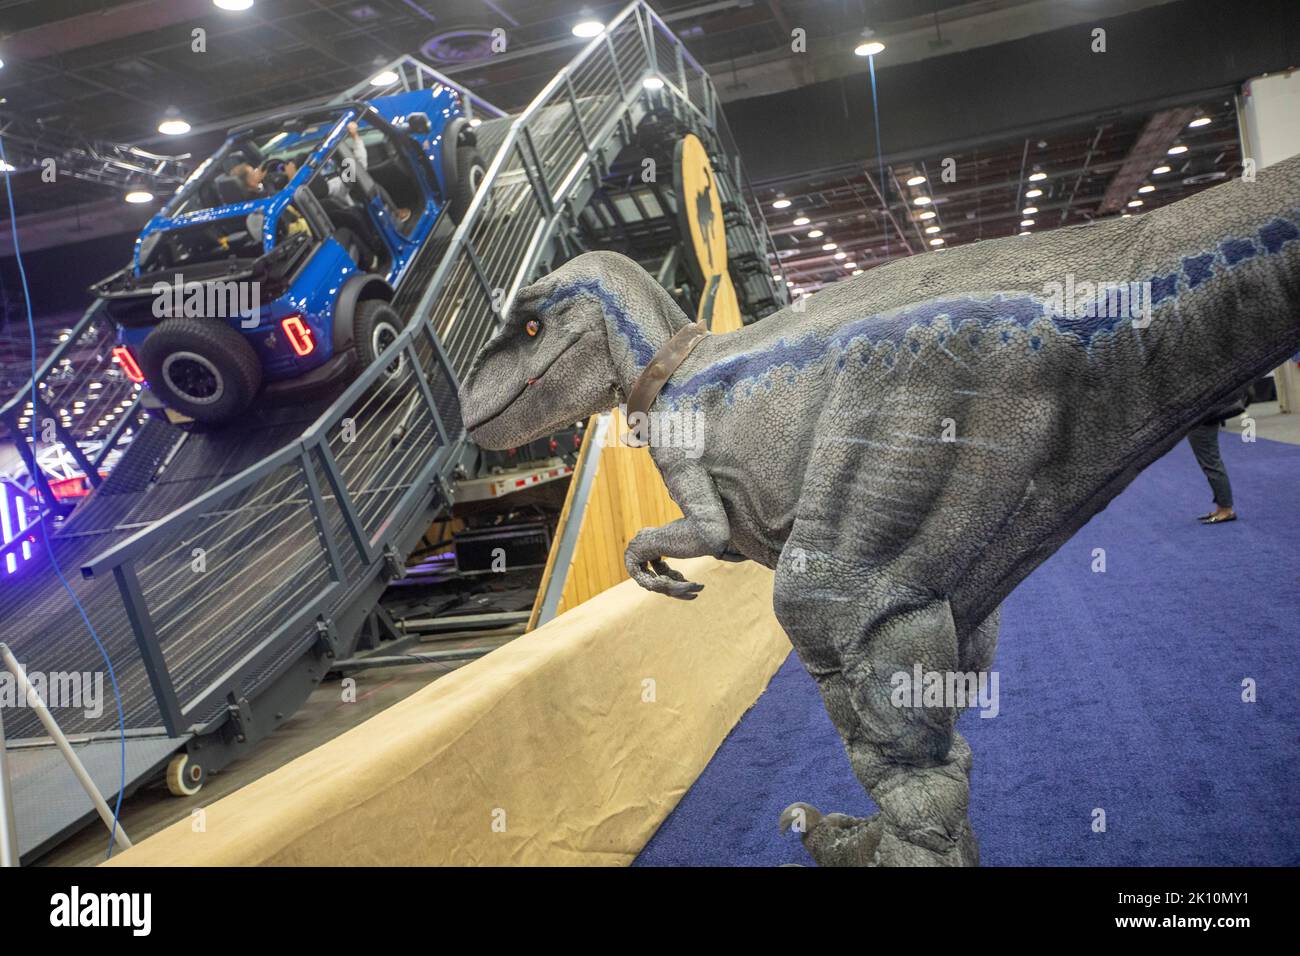 Dinosaurs, World's Largest Rubber Duck Part Of New Detroit Auto Show